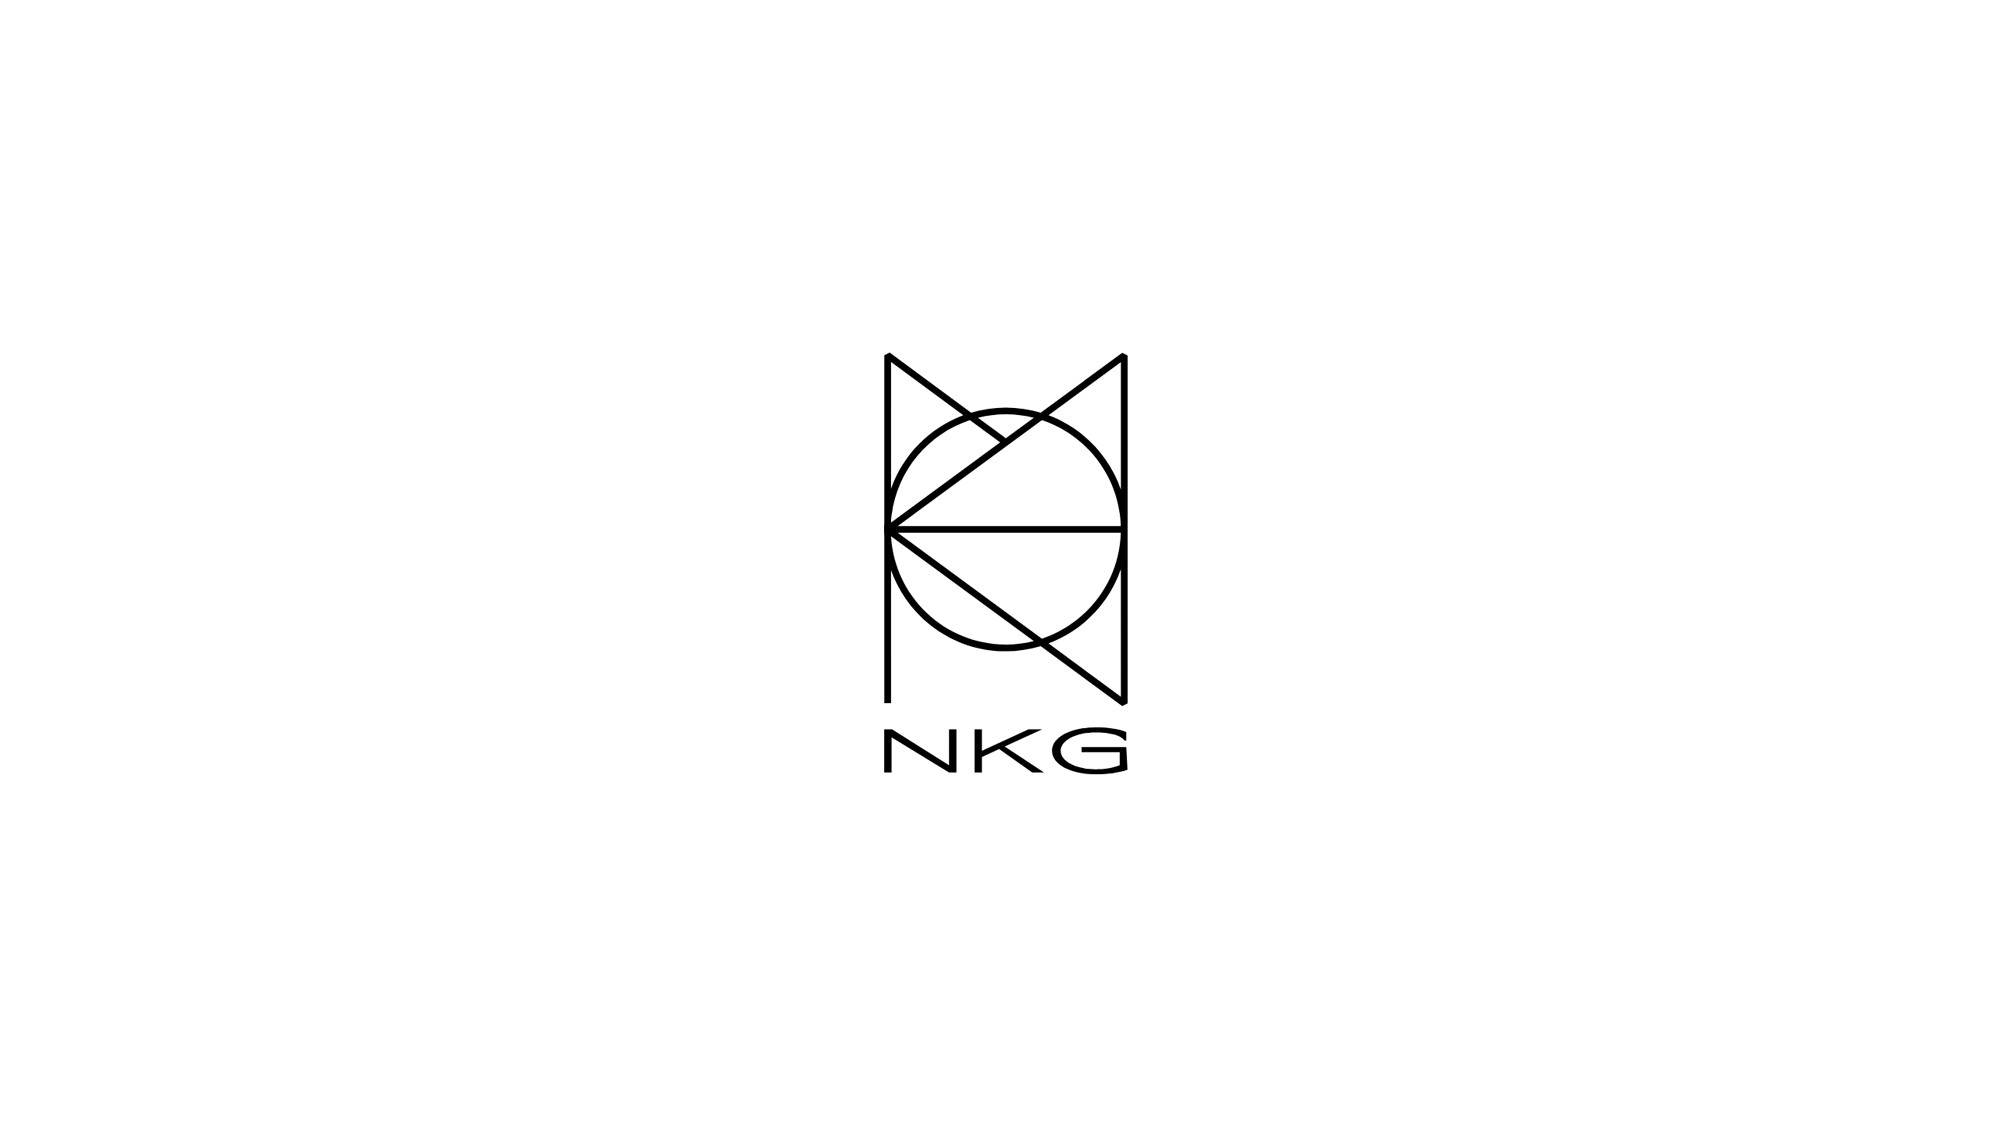 North Kensington Gate development logo